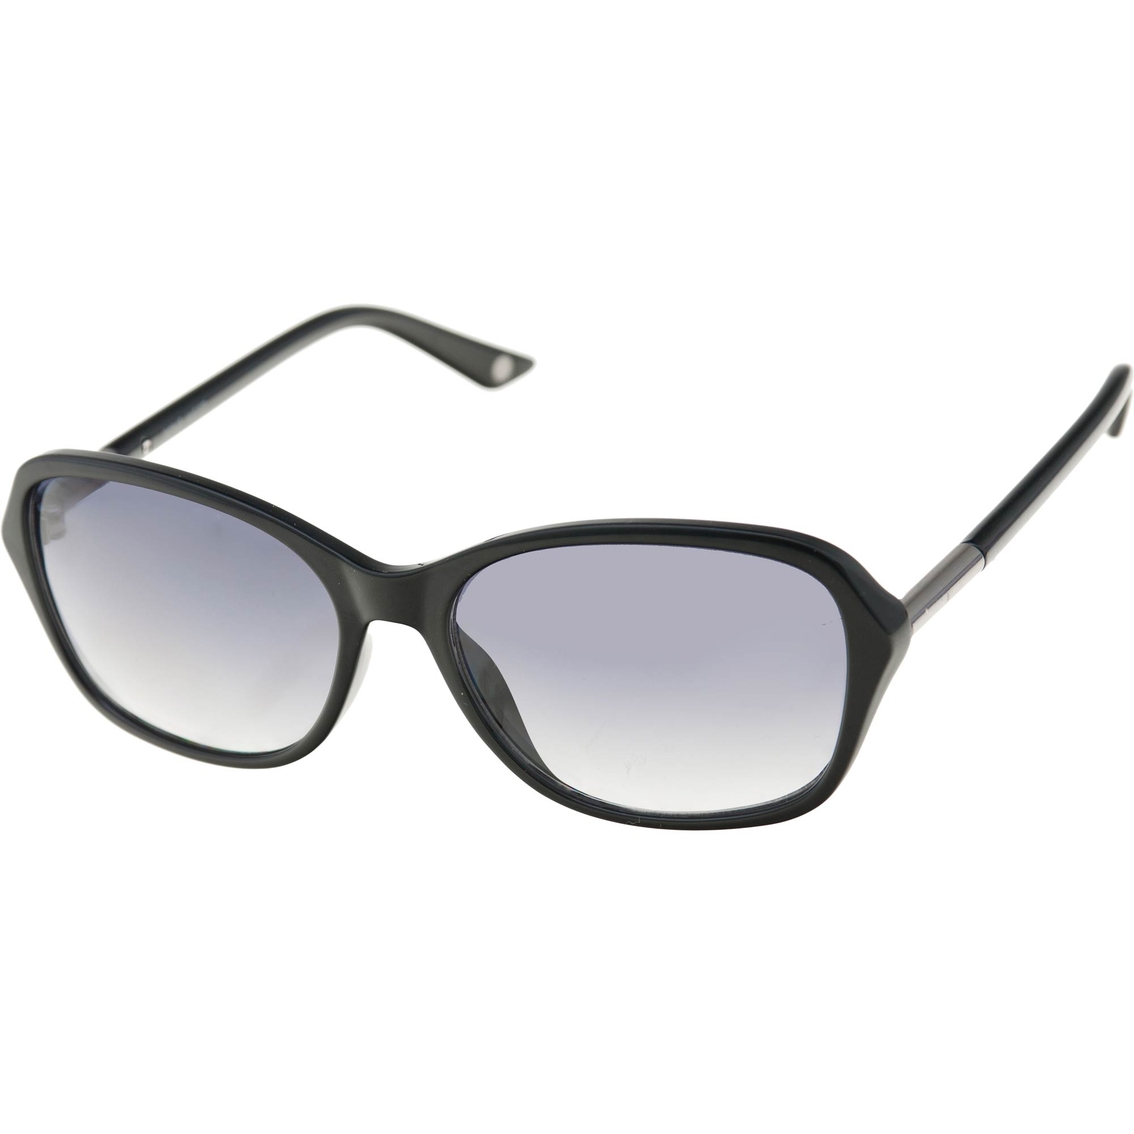 Nine West Rectangle Sunglasses 38373rnj001 | Women's Sunglasses ...